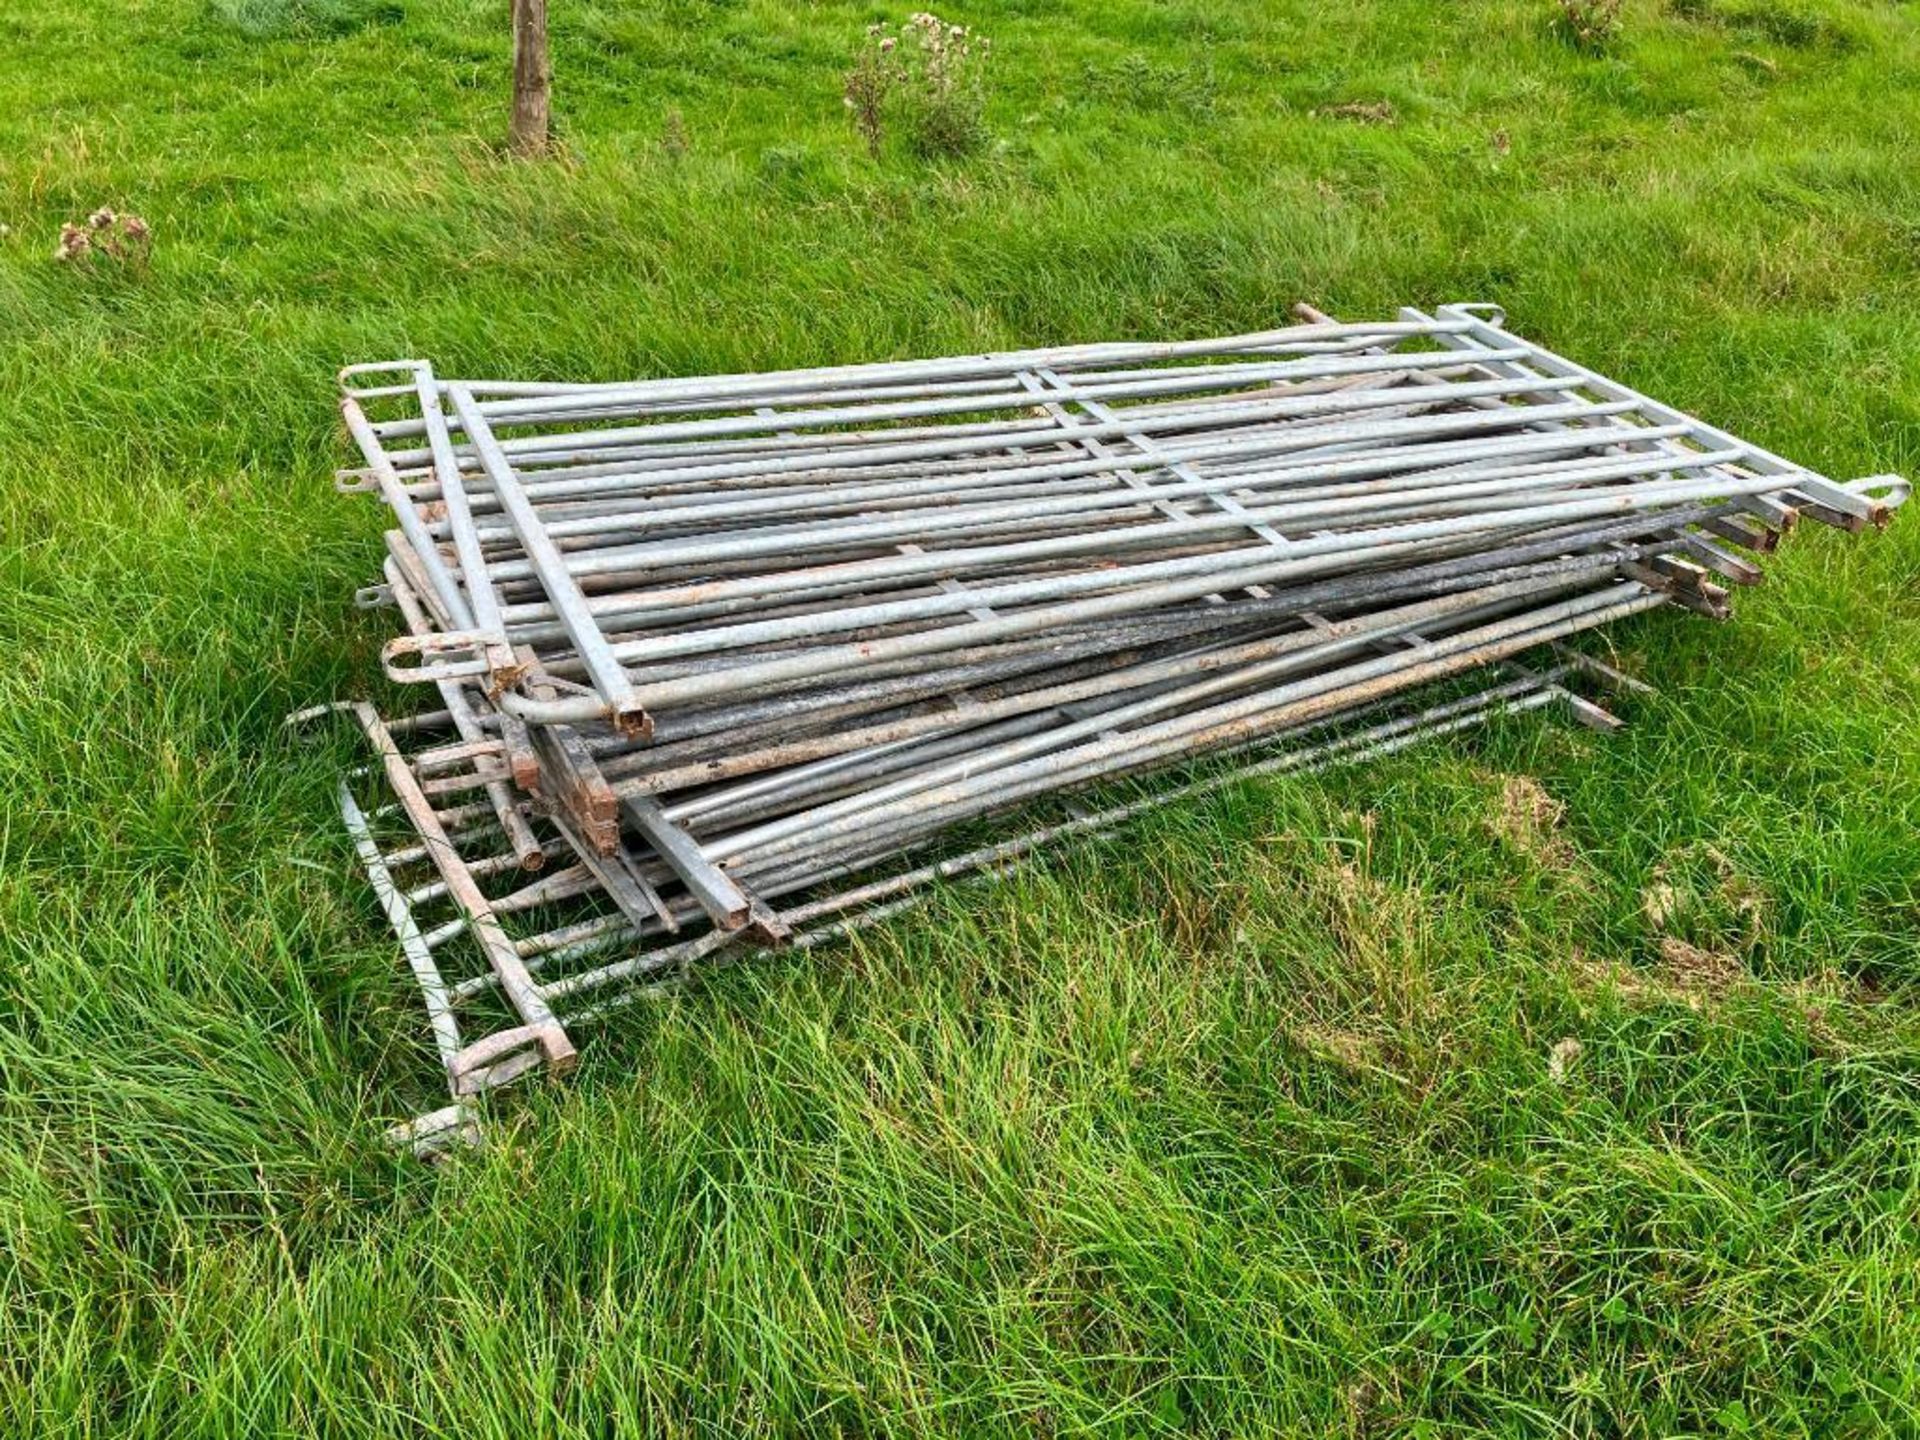 Quantity 6ft galvanised sheep hurdles - Image 2 of 2